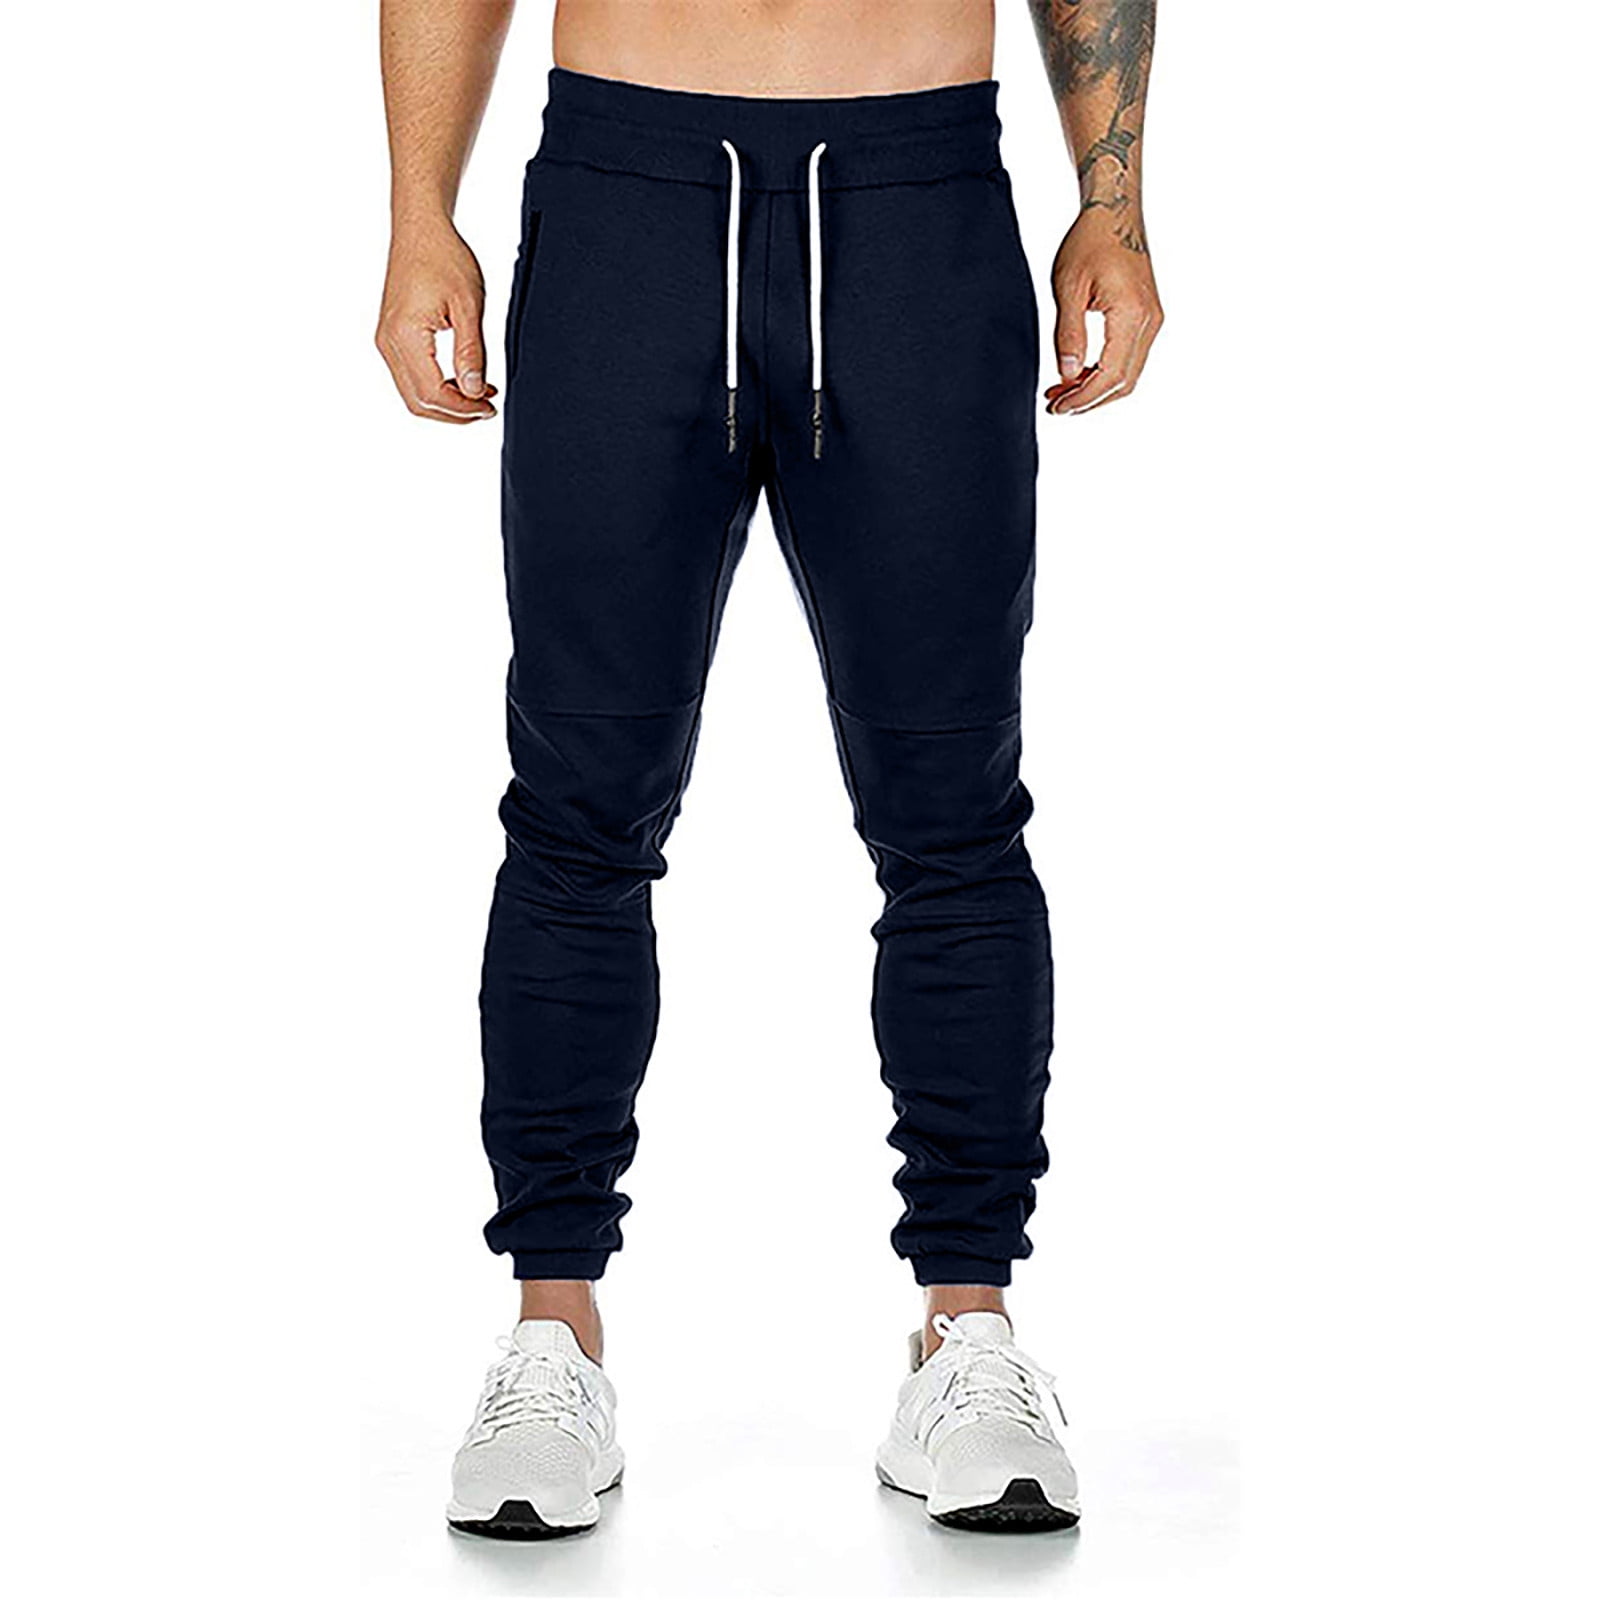 Stamzod Trousers For Men Drawstring Zipper Pocket Running Fitness Pants ...